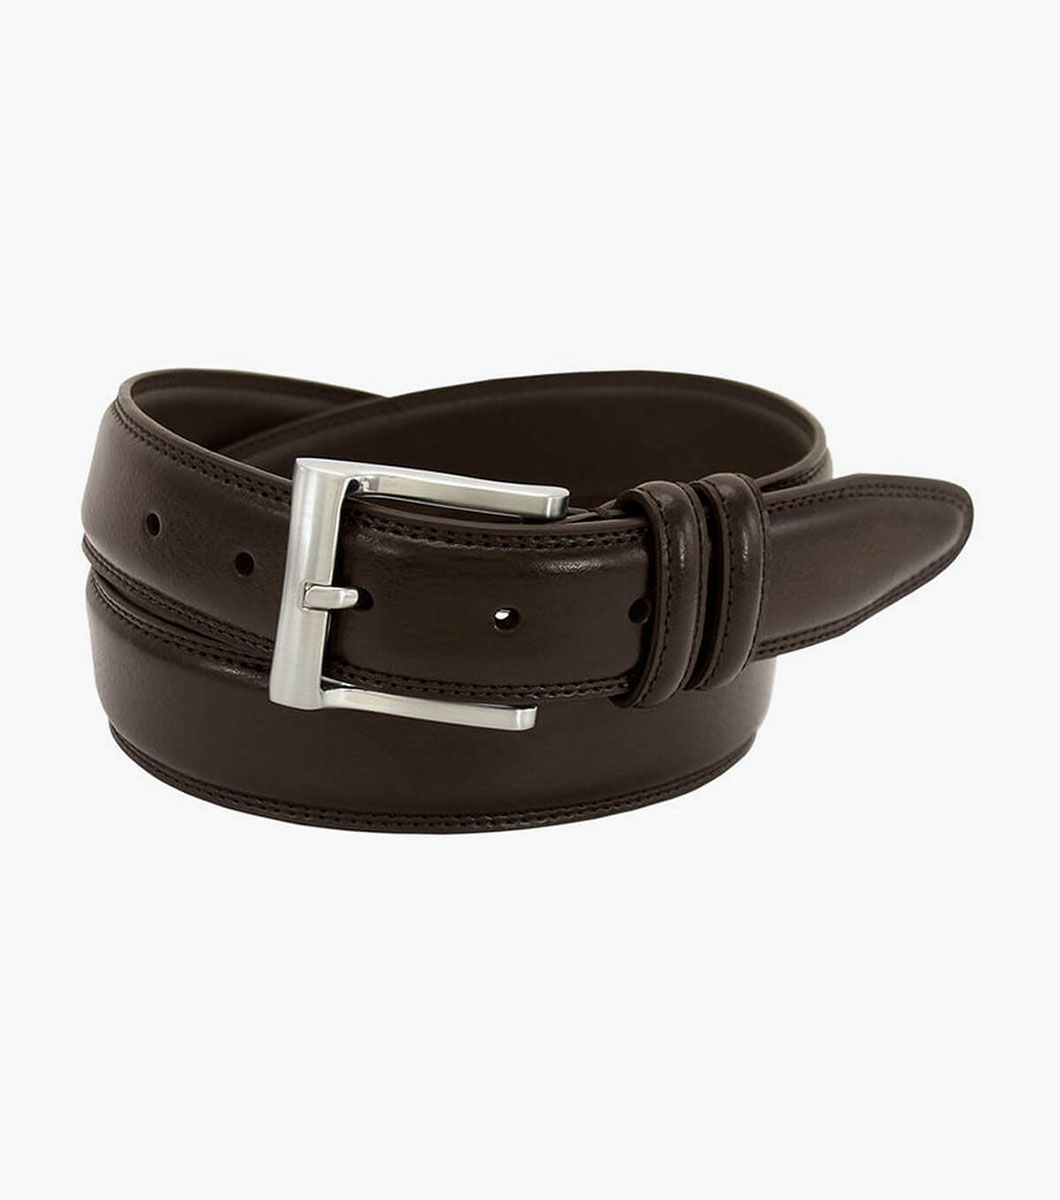 Martin XL Pebble Grain Leather Belt All Accessories | Florsheim.com